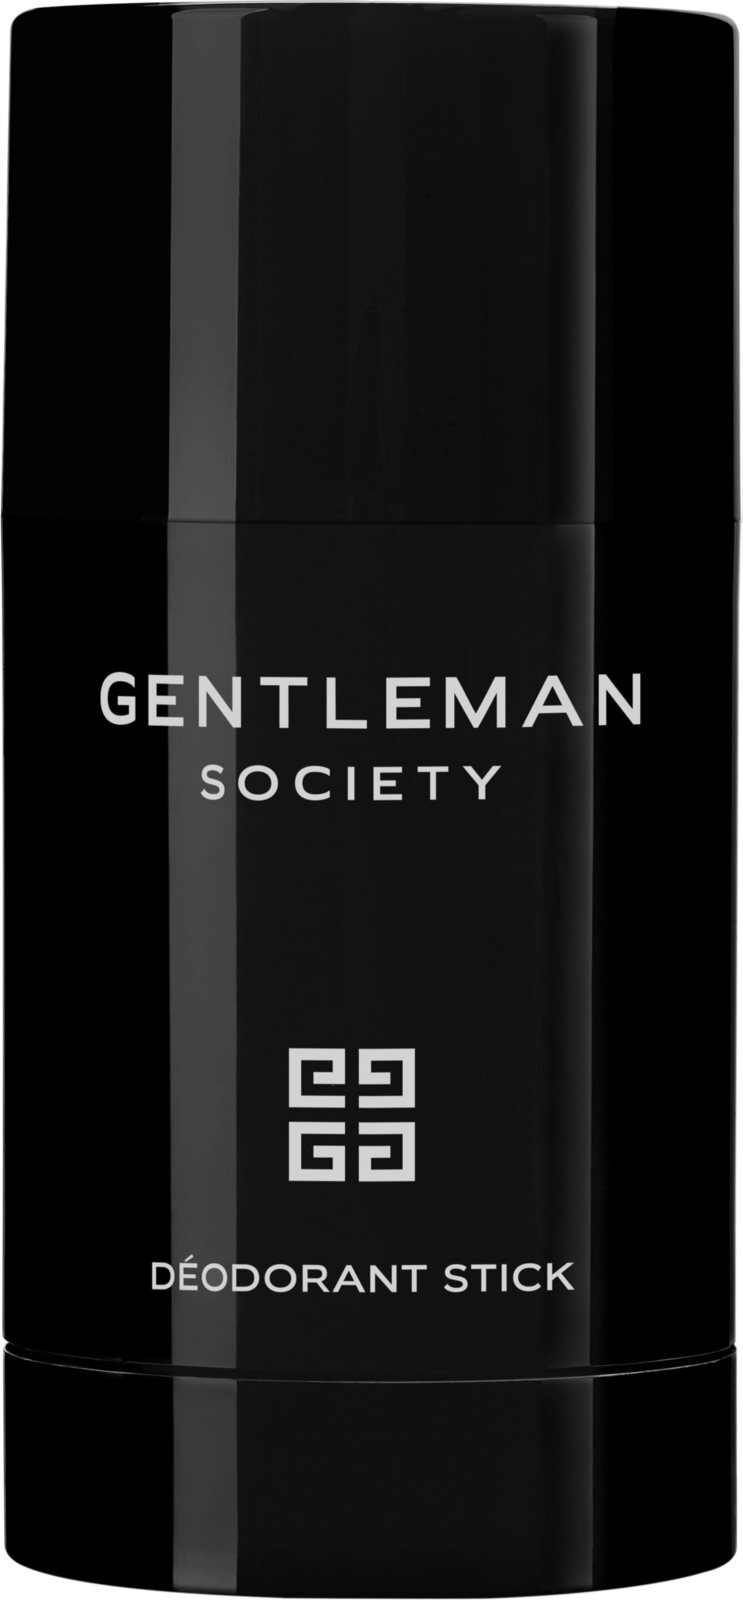 Дезодорант gentleman. Eye Cell крем. Дезодорант живанши. Givenchy Gentleman Society. Крем для кожи вокруг глаз Eyecell.